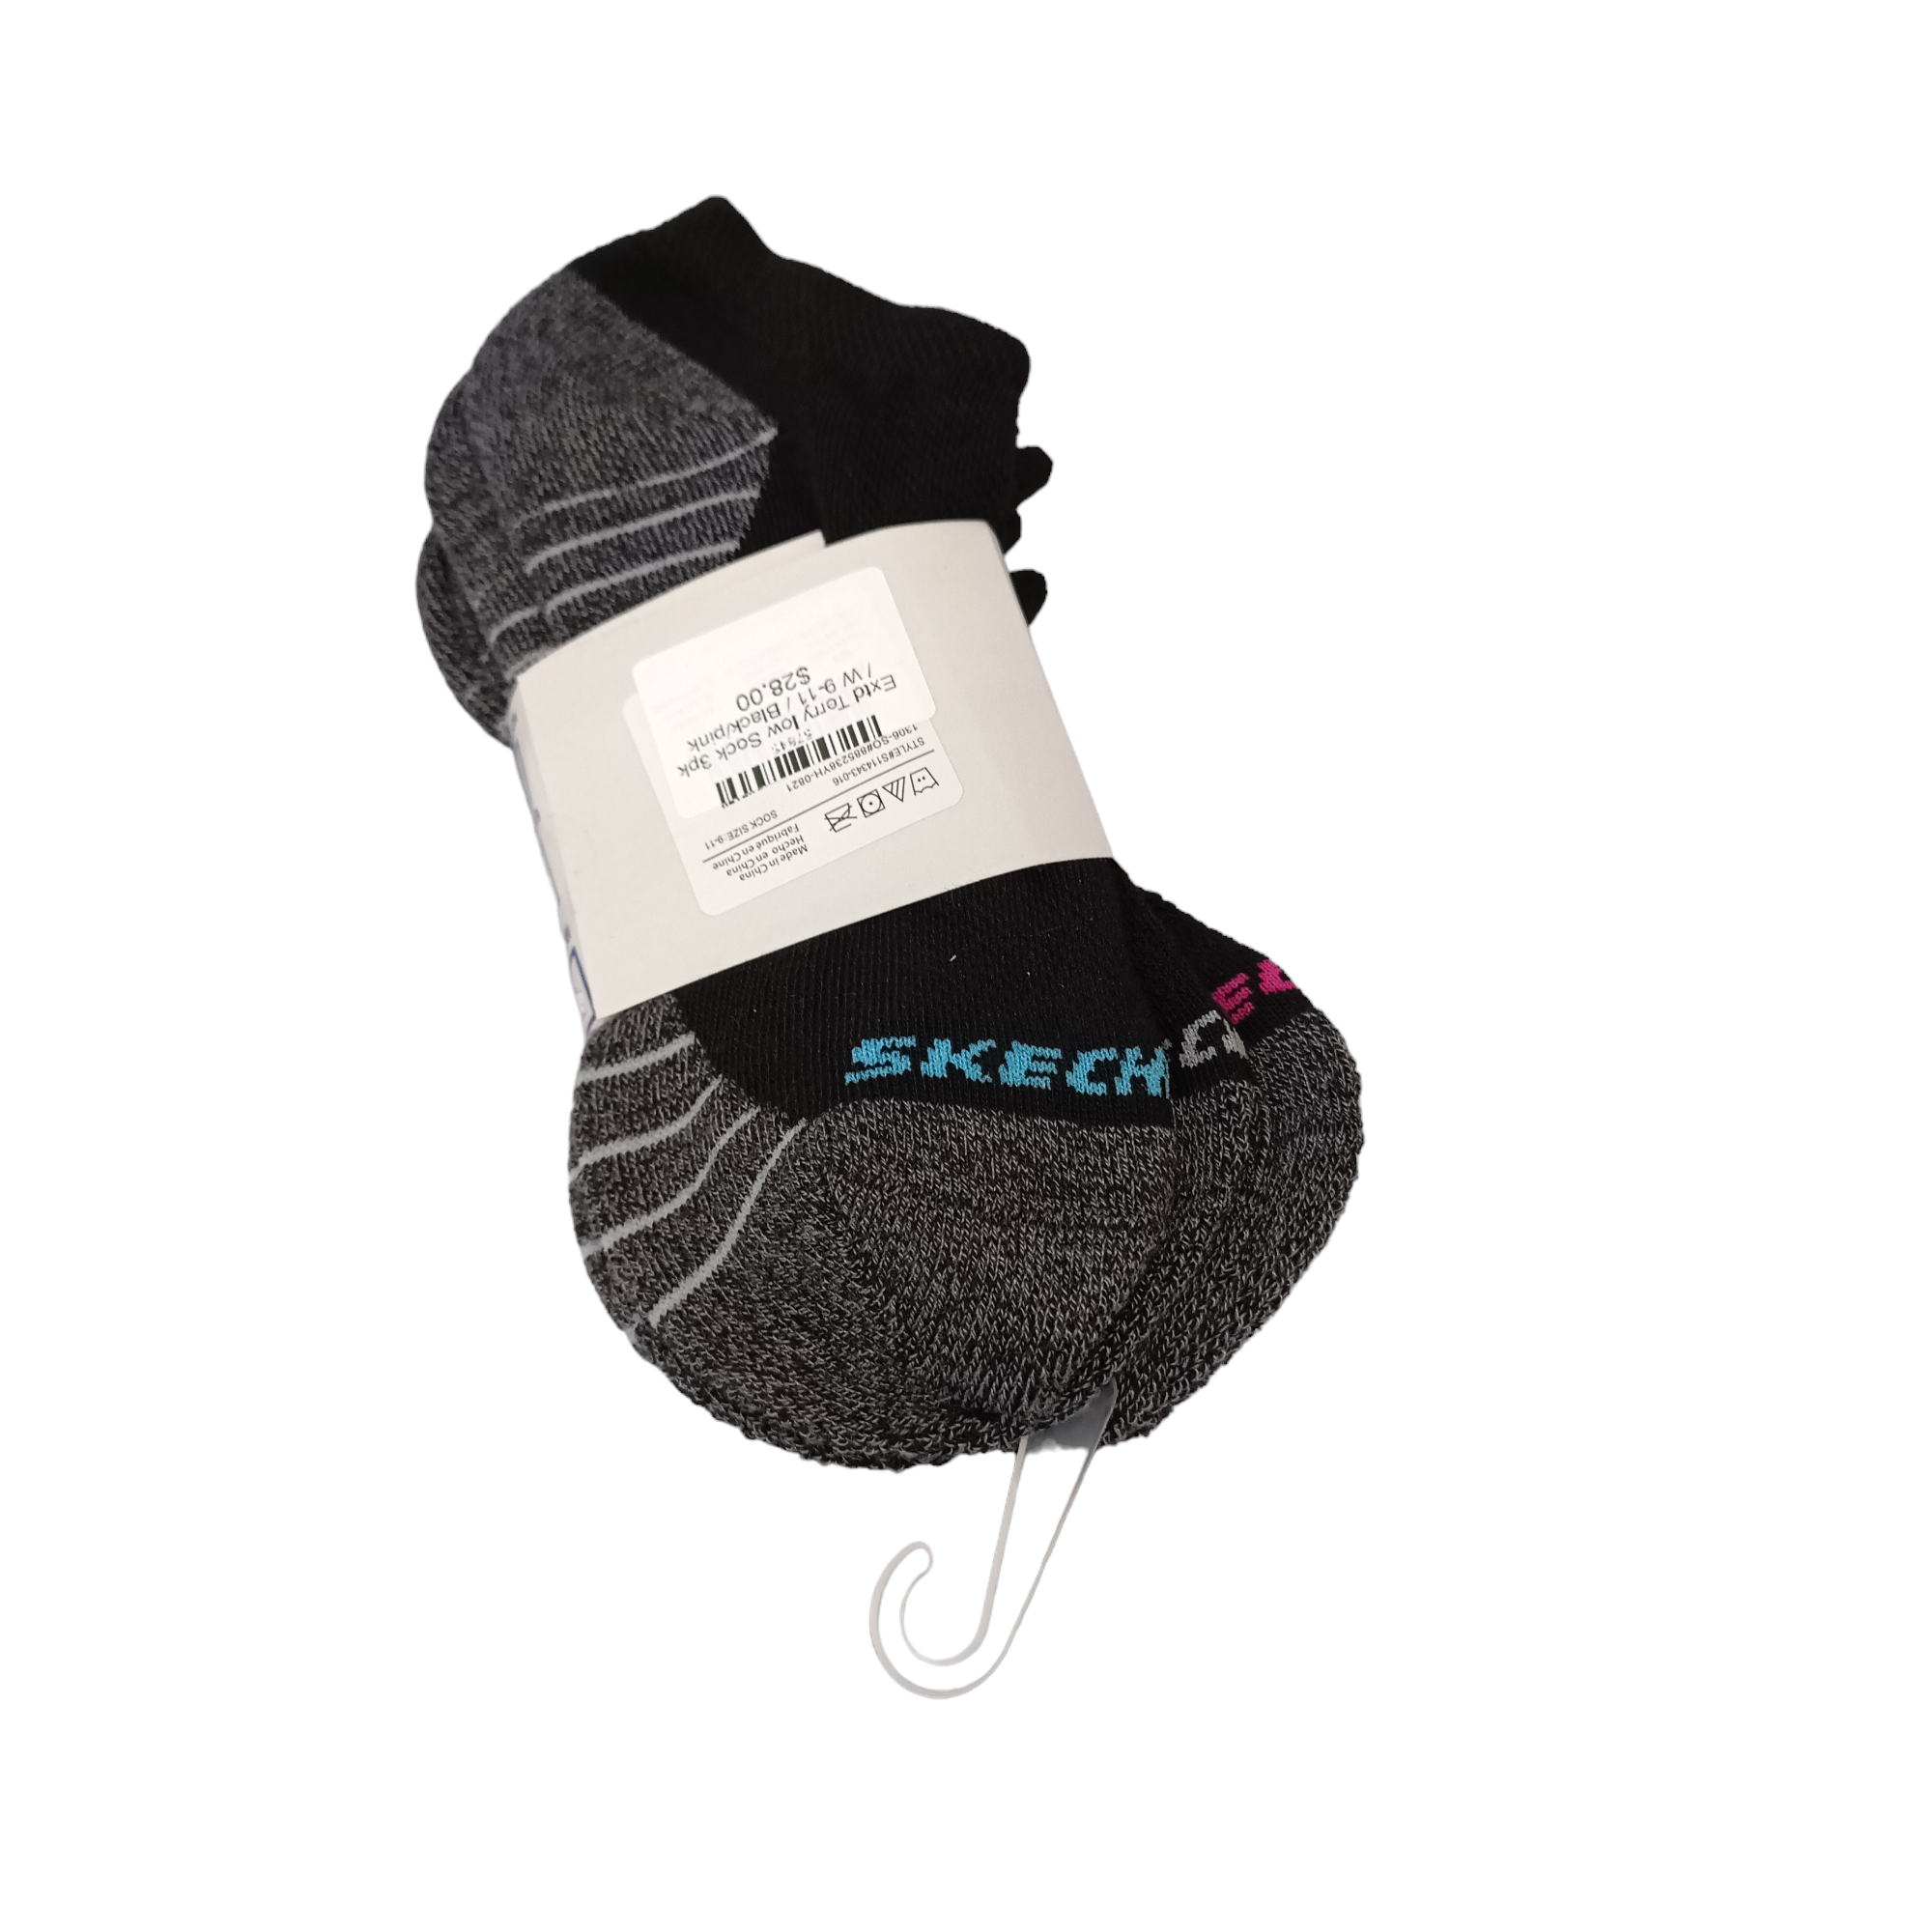 Extd Terry low Sock 3pk - shoe&amp;me - Skechers - Socks - Socks, Womens